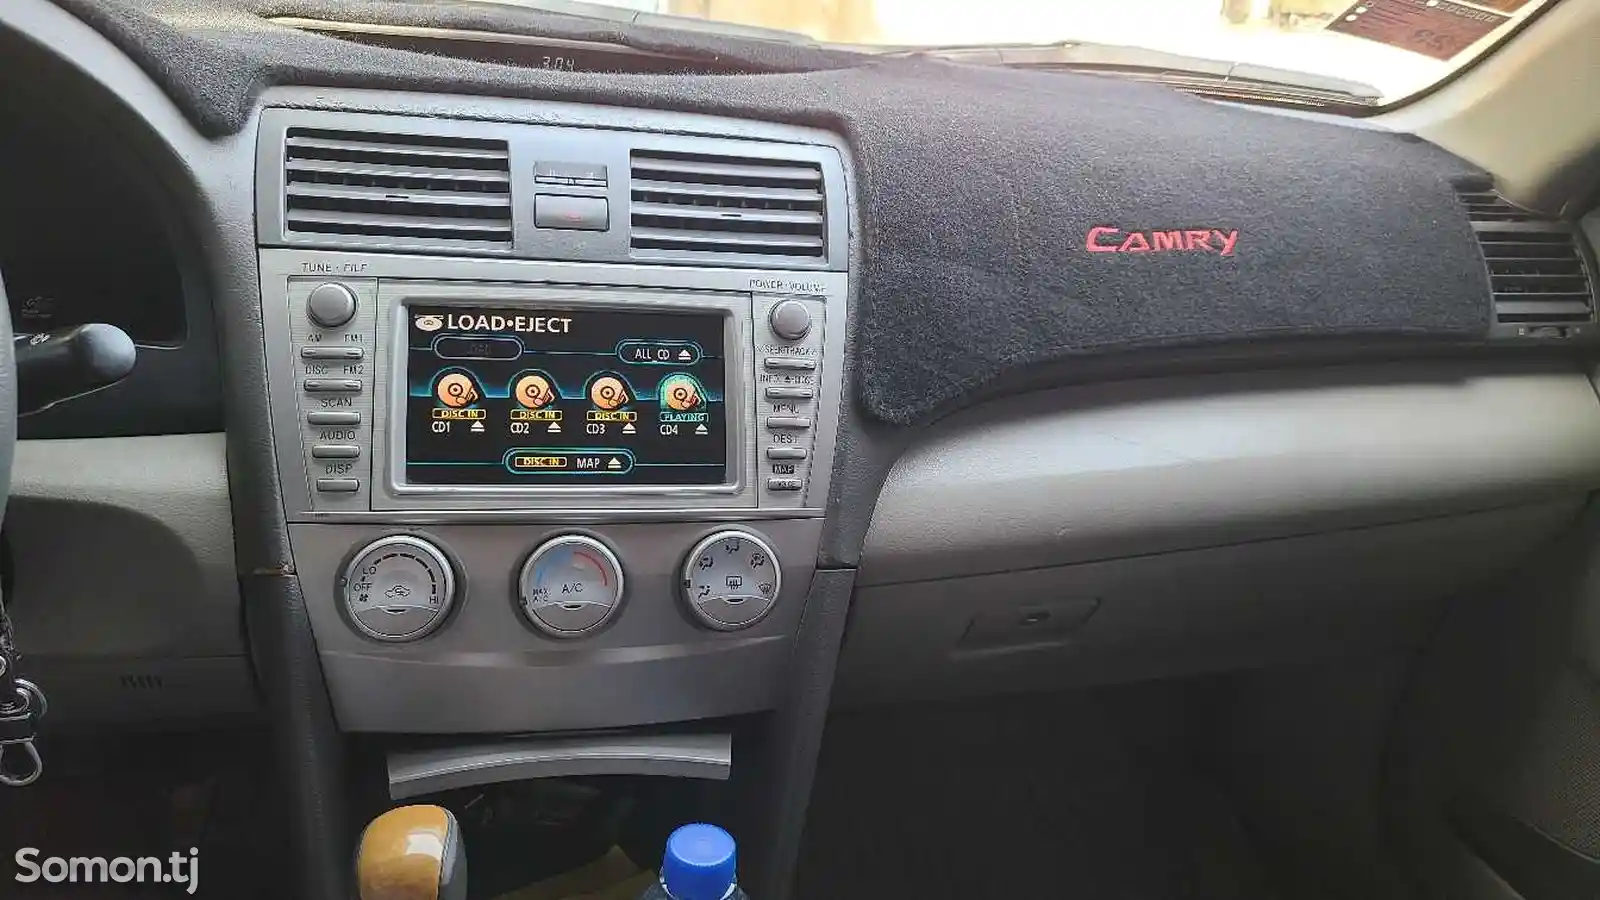 Toyota Camry, 2010-4